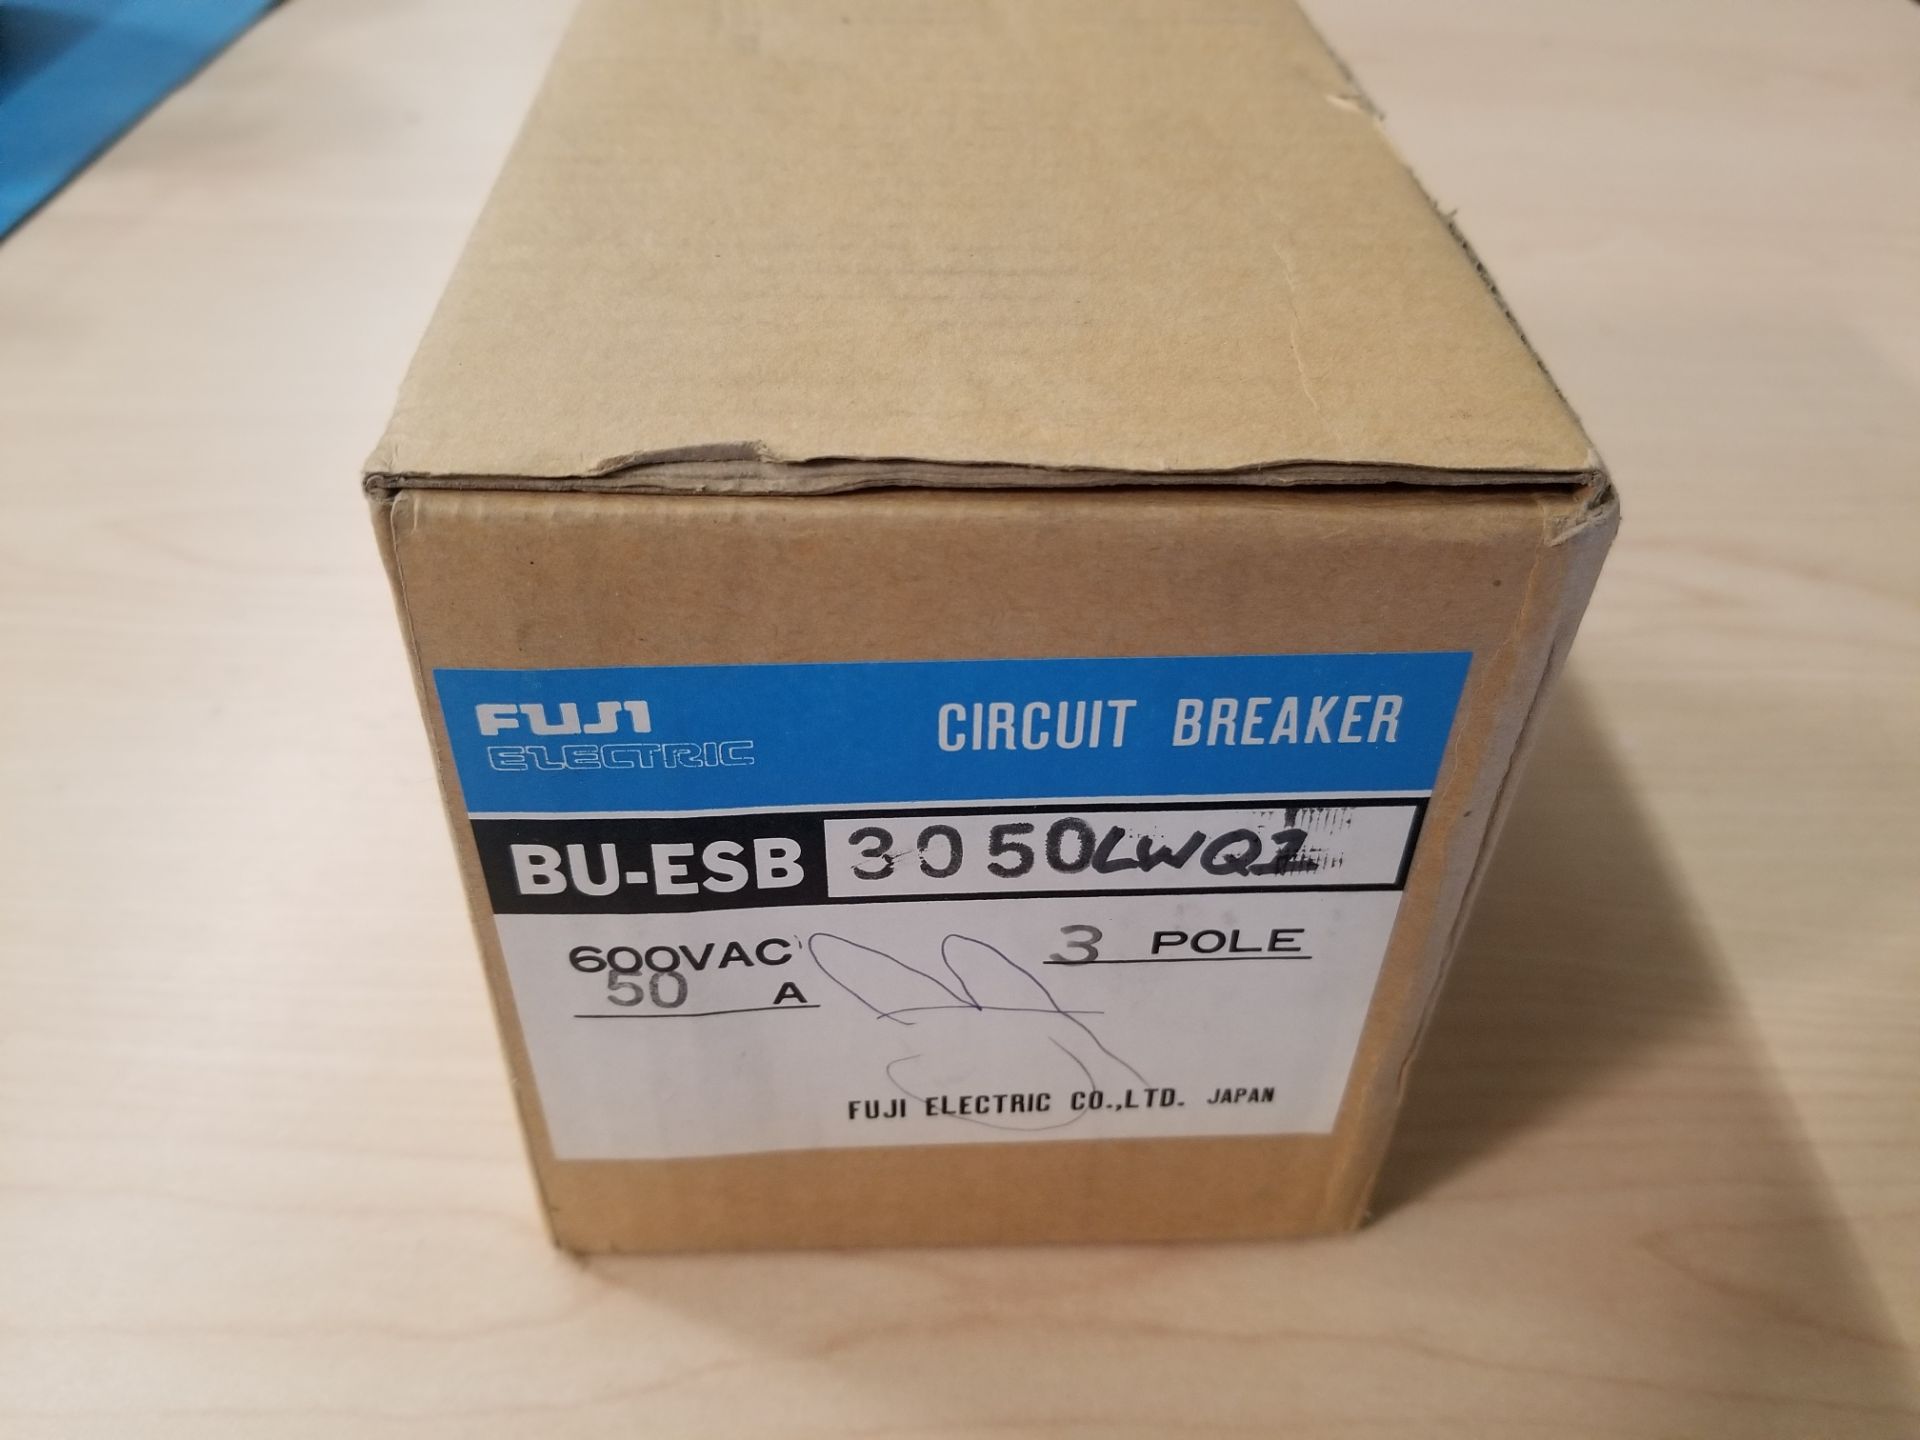 NEW FUJI BU-ESB3050 50A CIRCUIT BREAKER